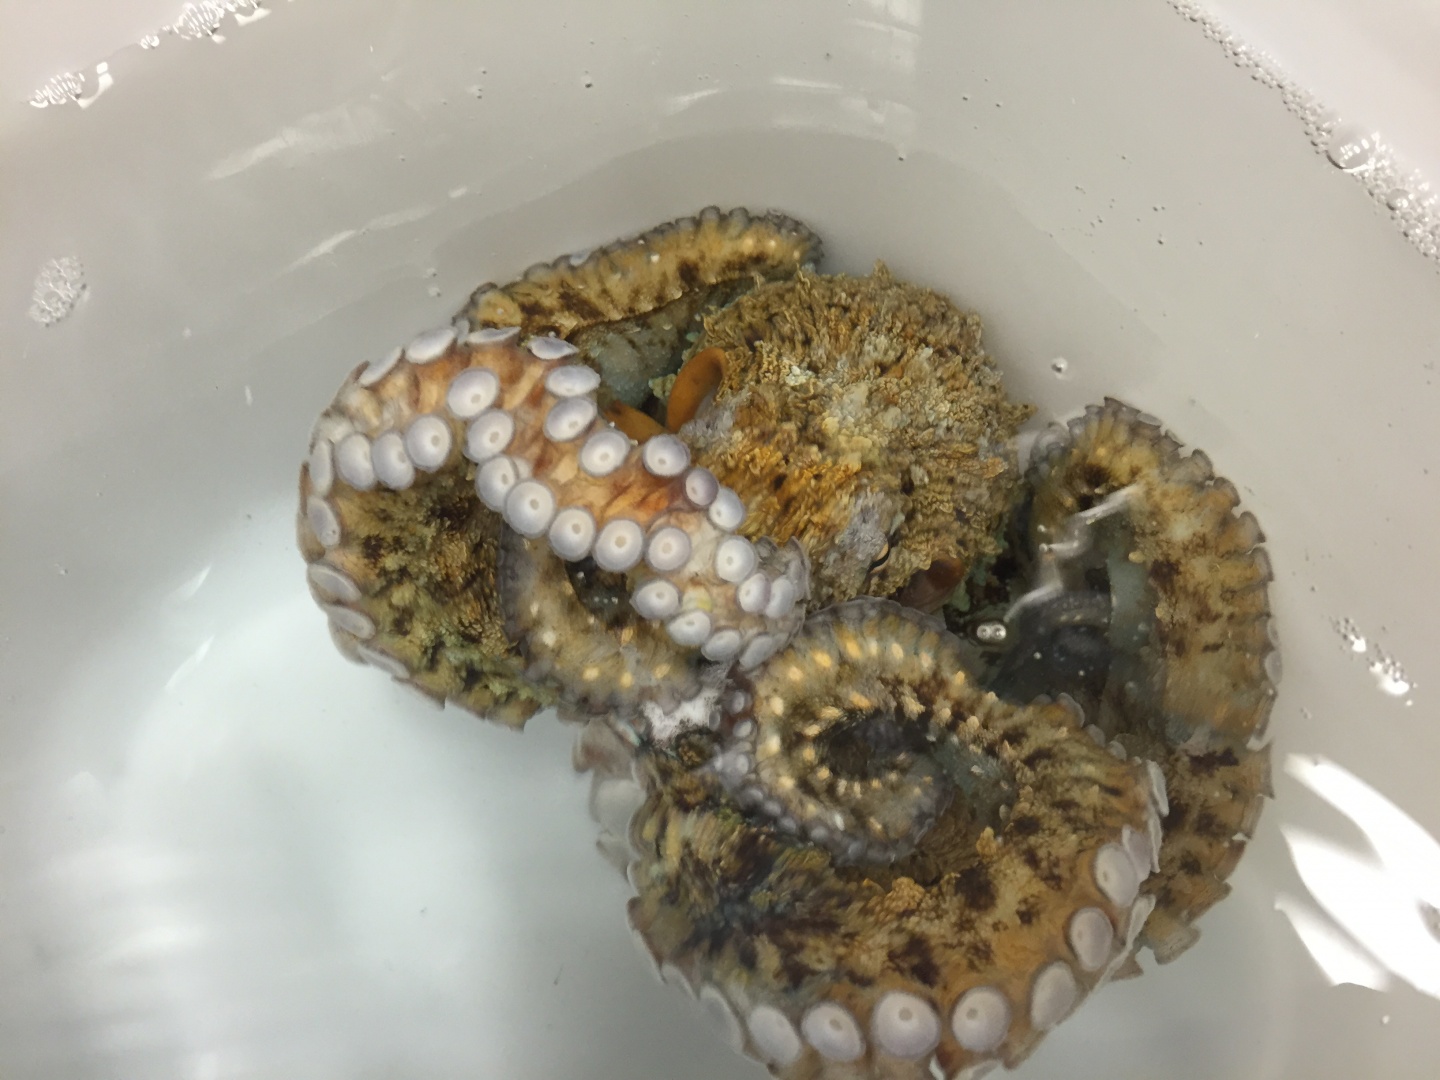 Sampling Octopus ワモンダコのサンプリング 15 09 Oist Groups